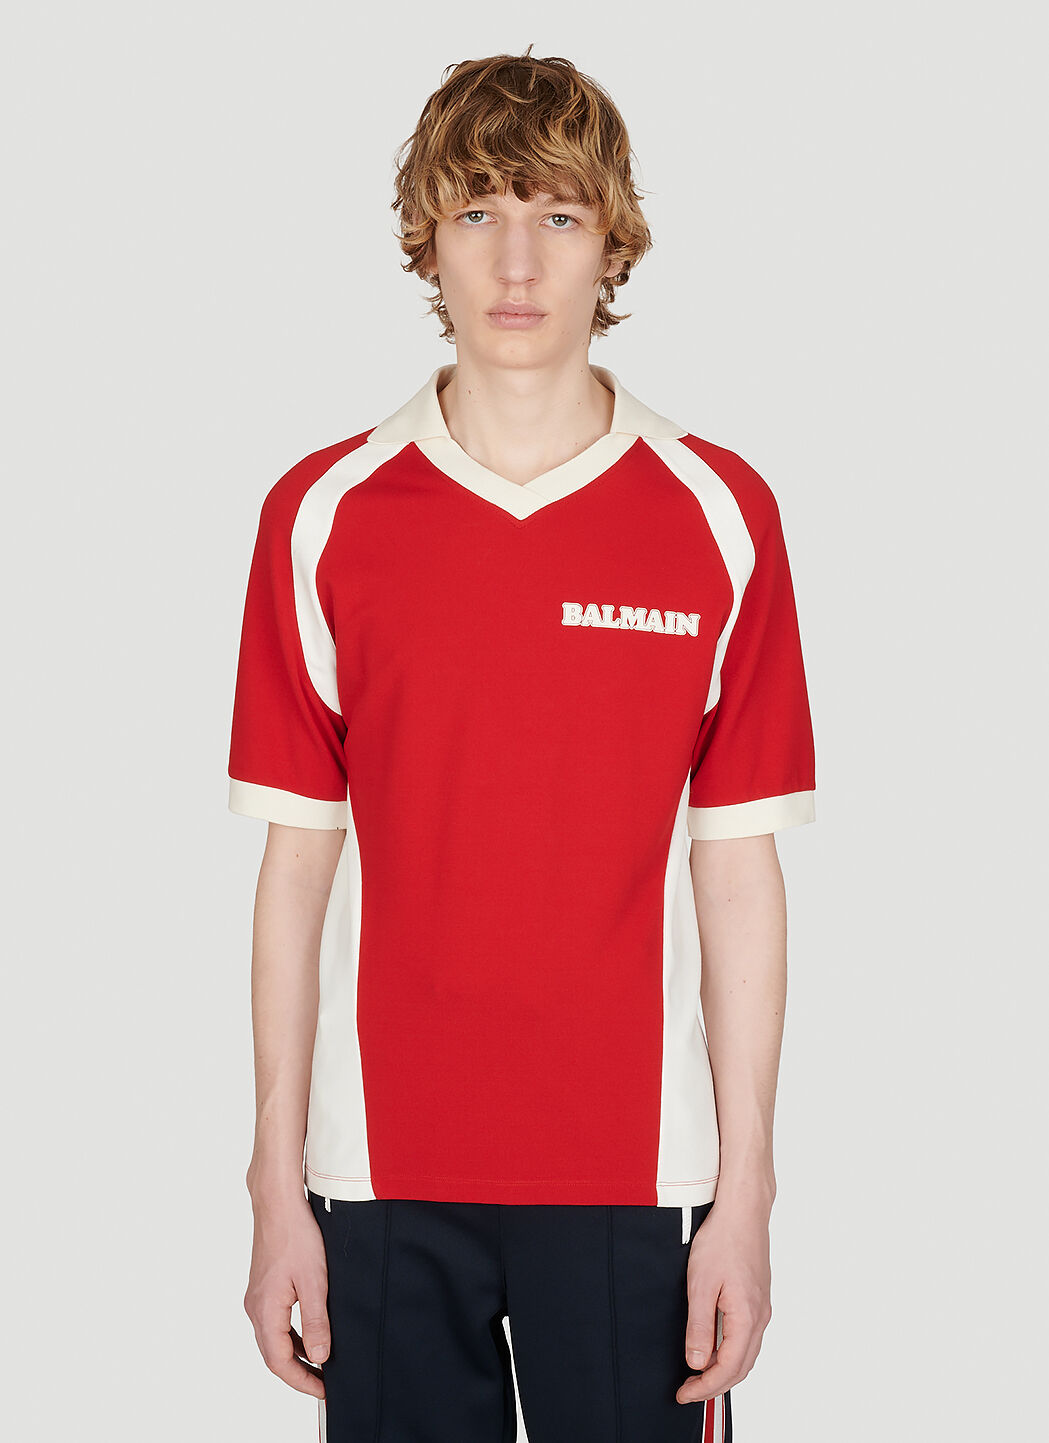 Balmain Retro Logo Print Polo Shirt Red bln0154003